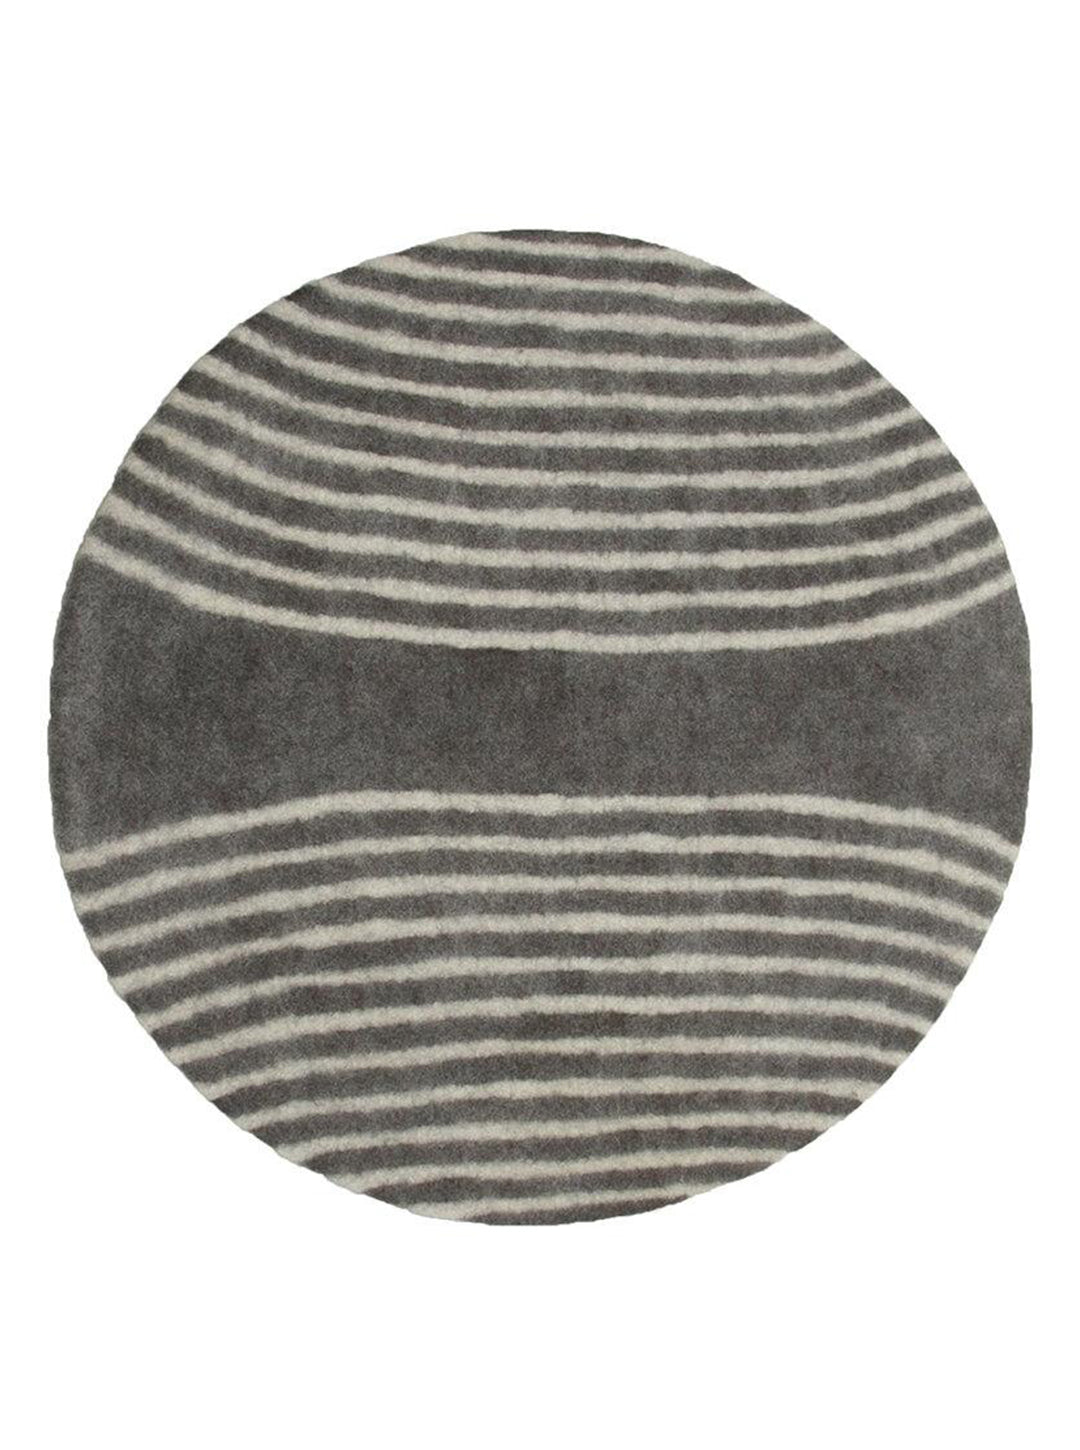 Shield rug 5.5'